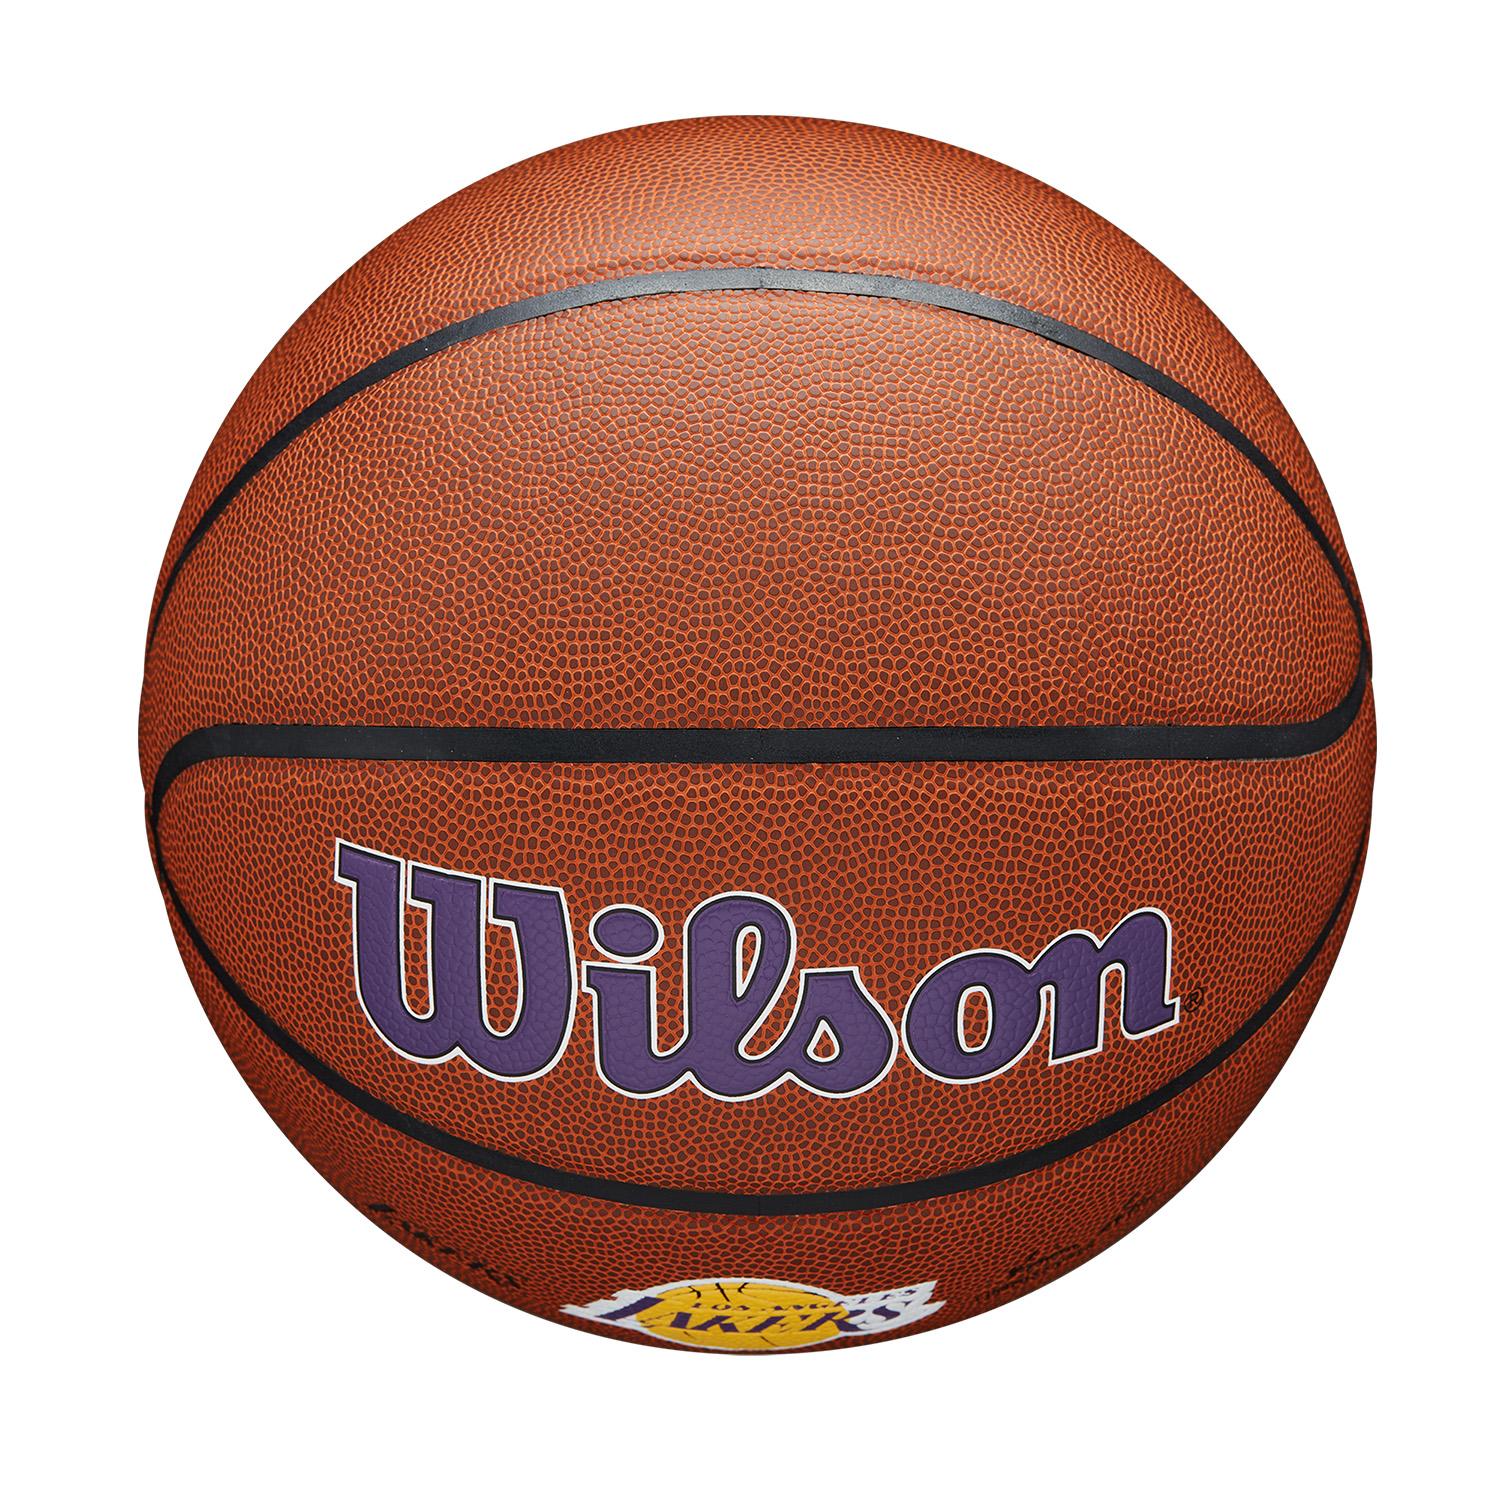 Balón NBA Team Alliance Lakers